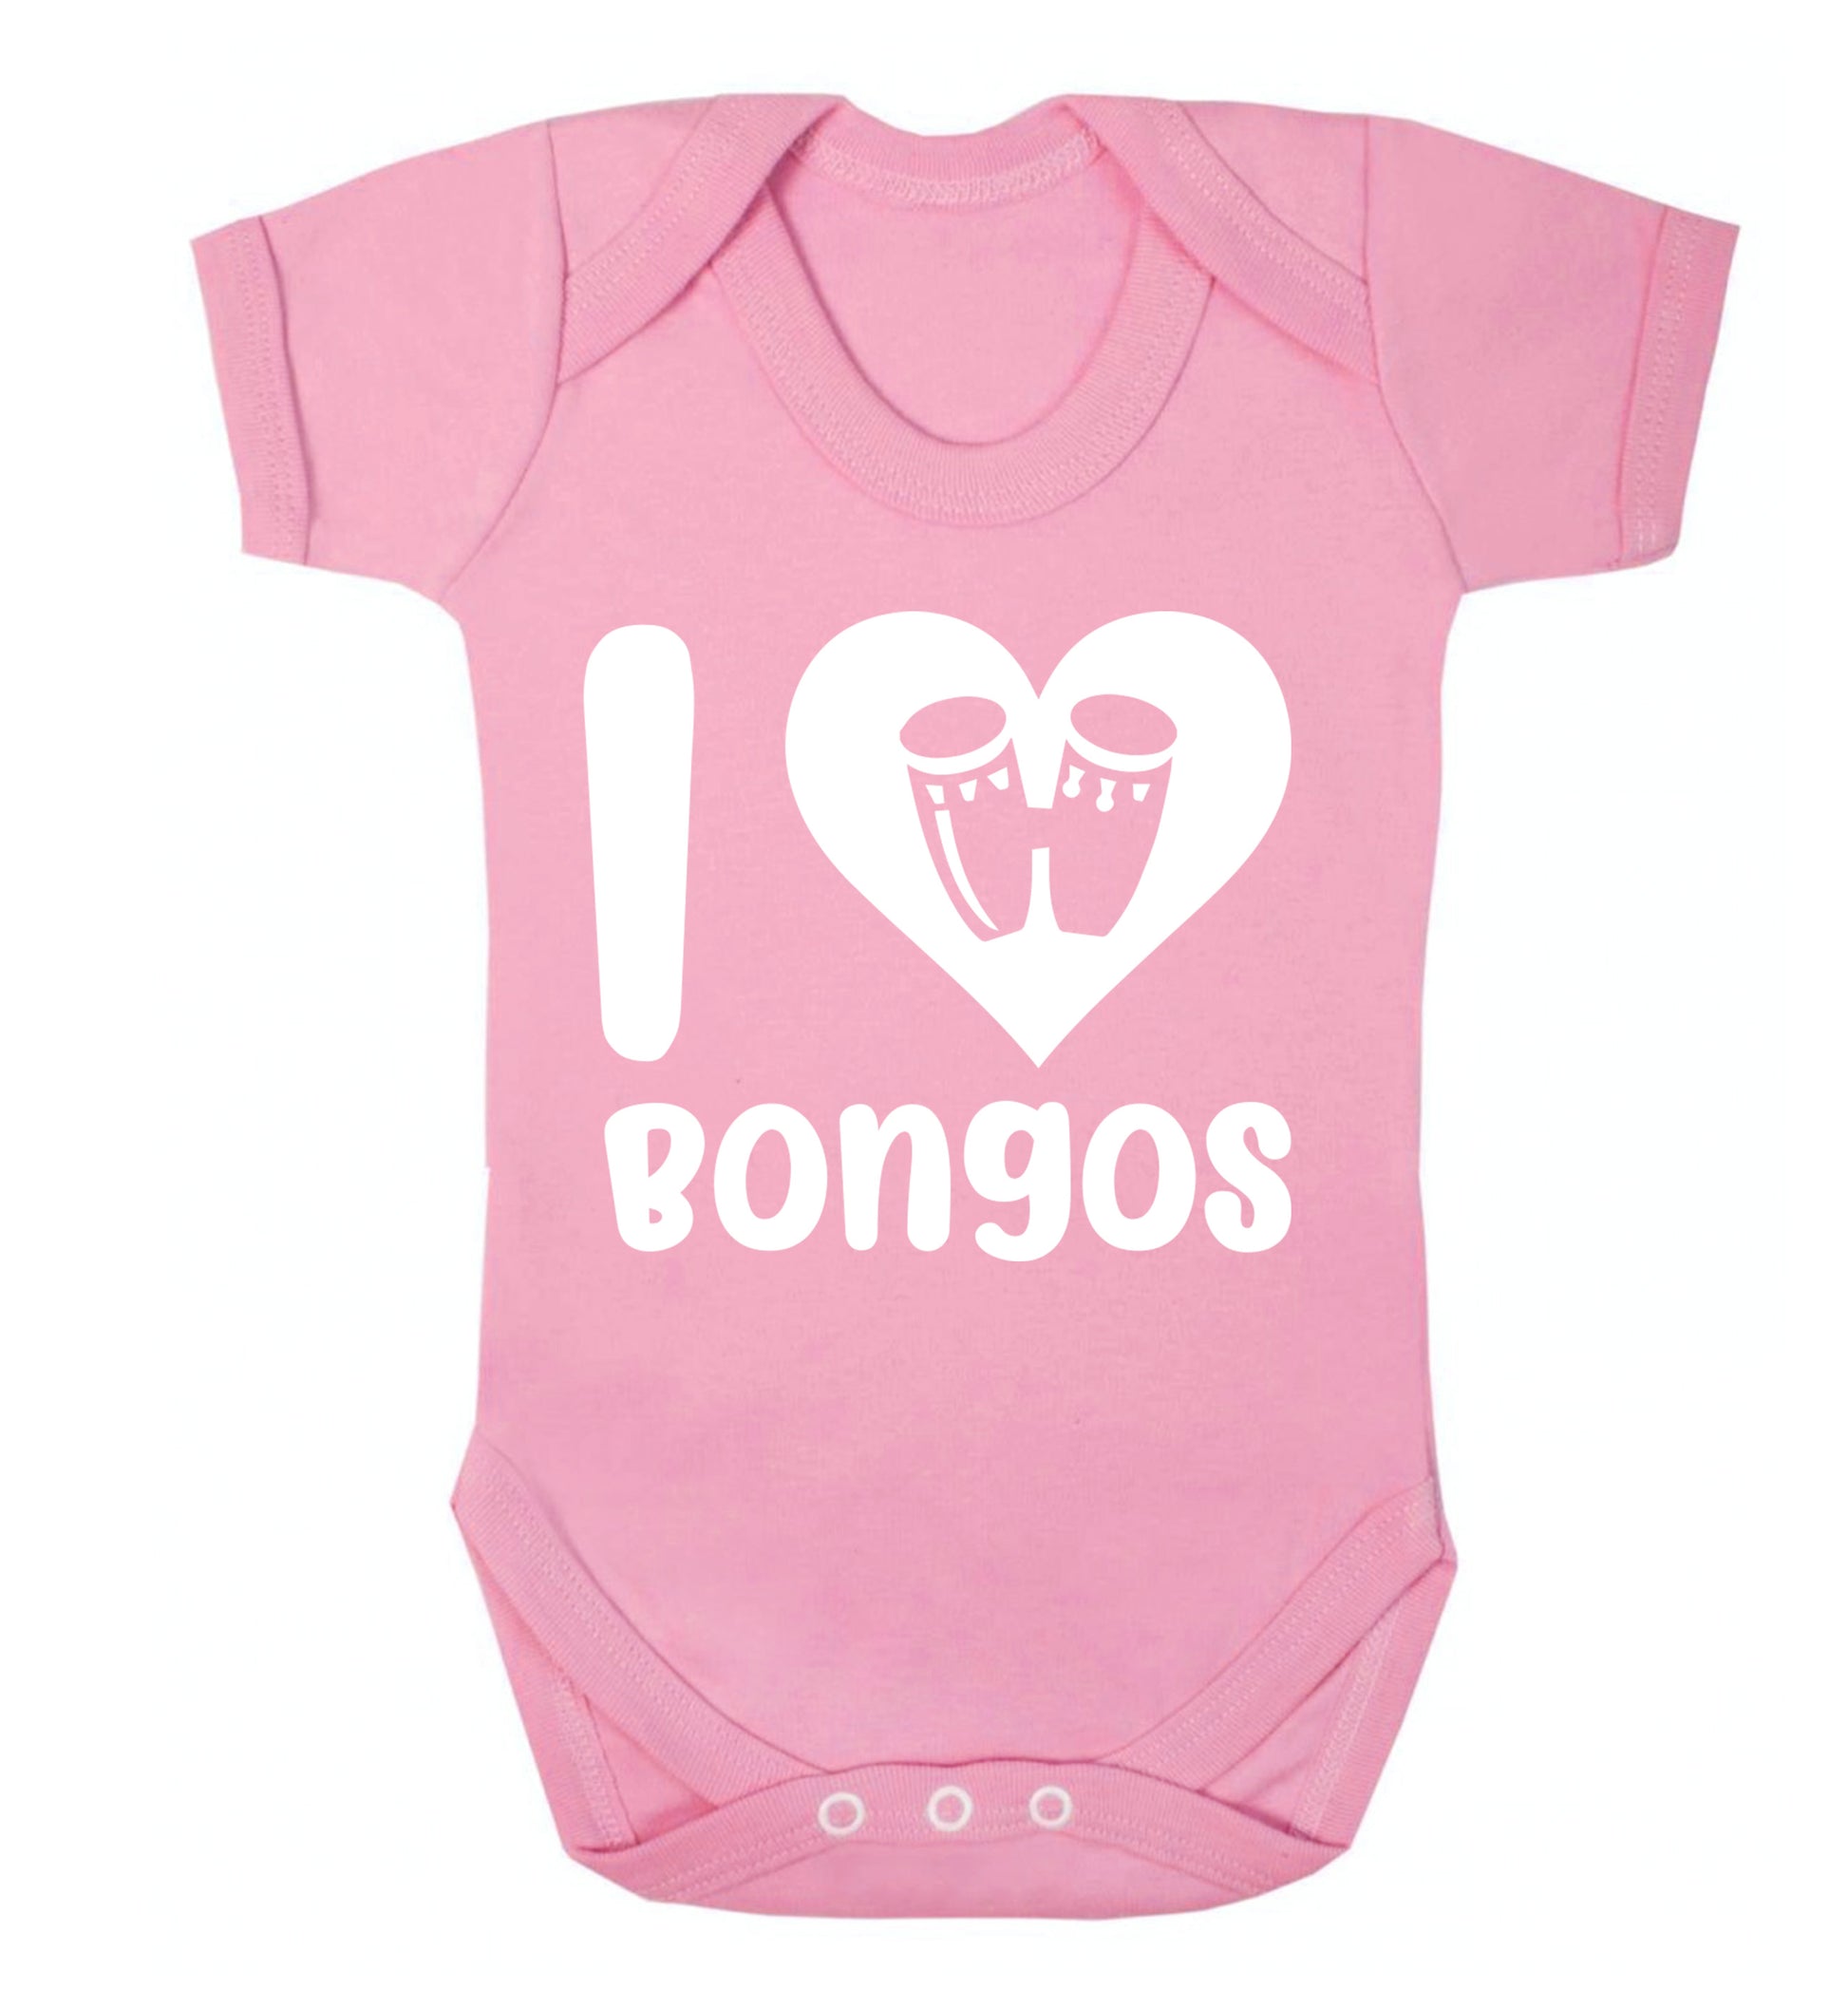 I love bongos Baby Vest pale pink 18-24 months